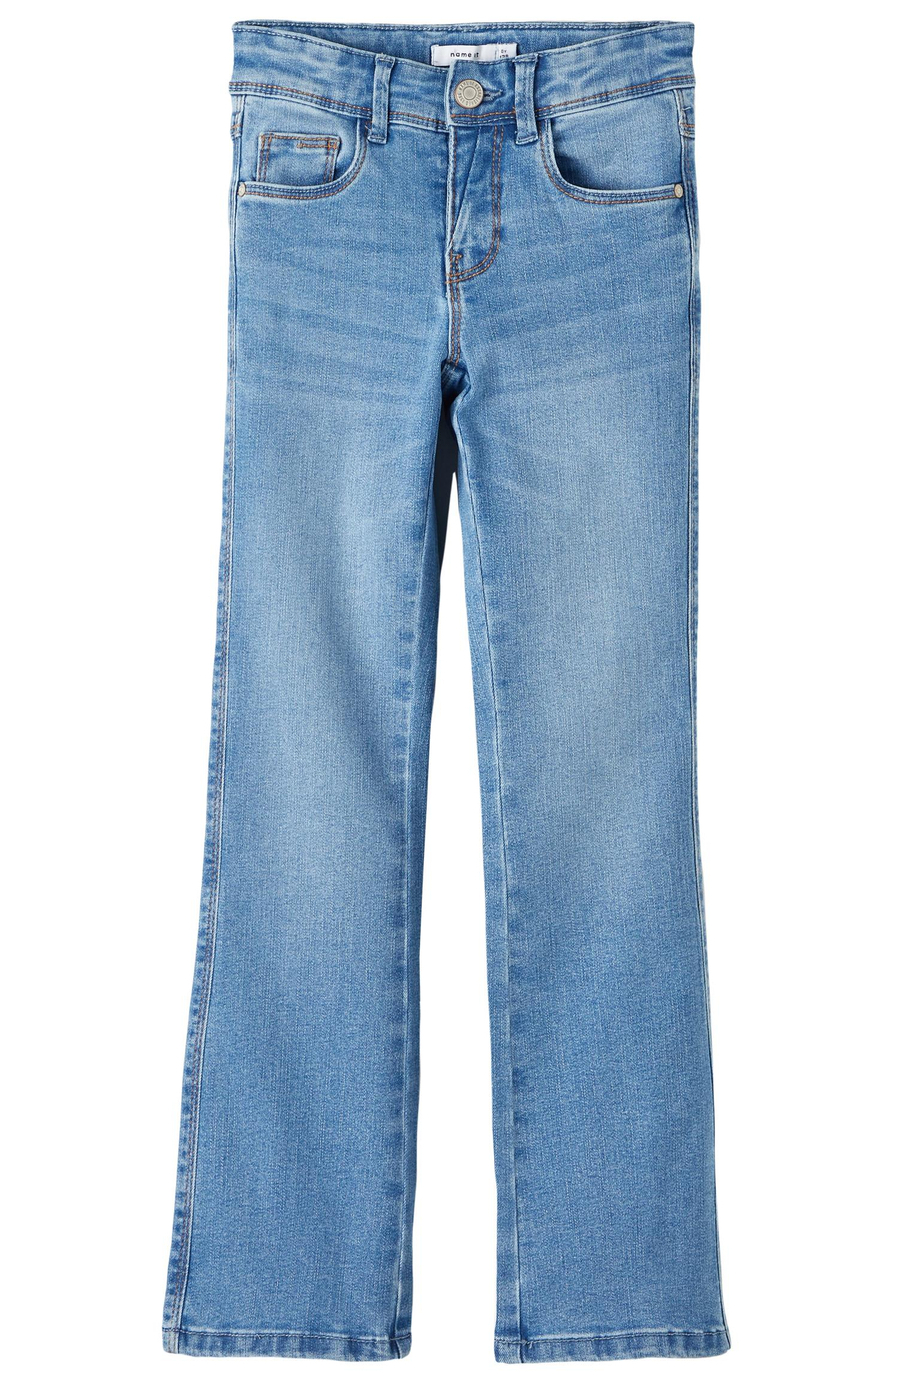 denim boot nkfpolly jeans it skinny name 1142-au 13208876 blue jeans medium